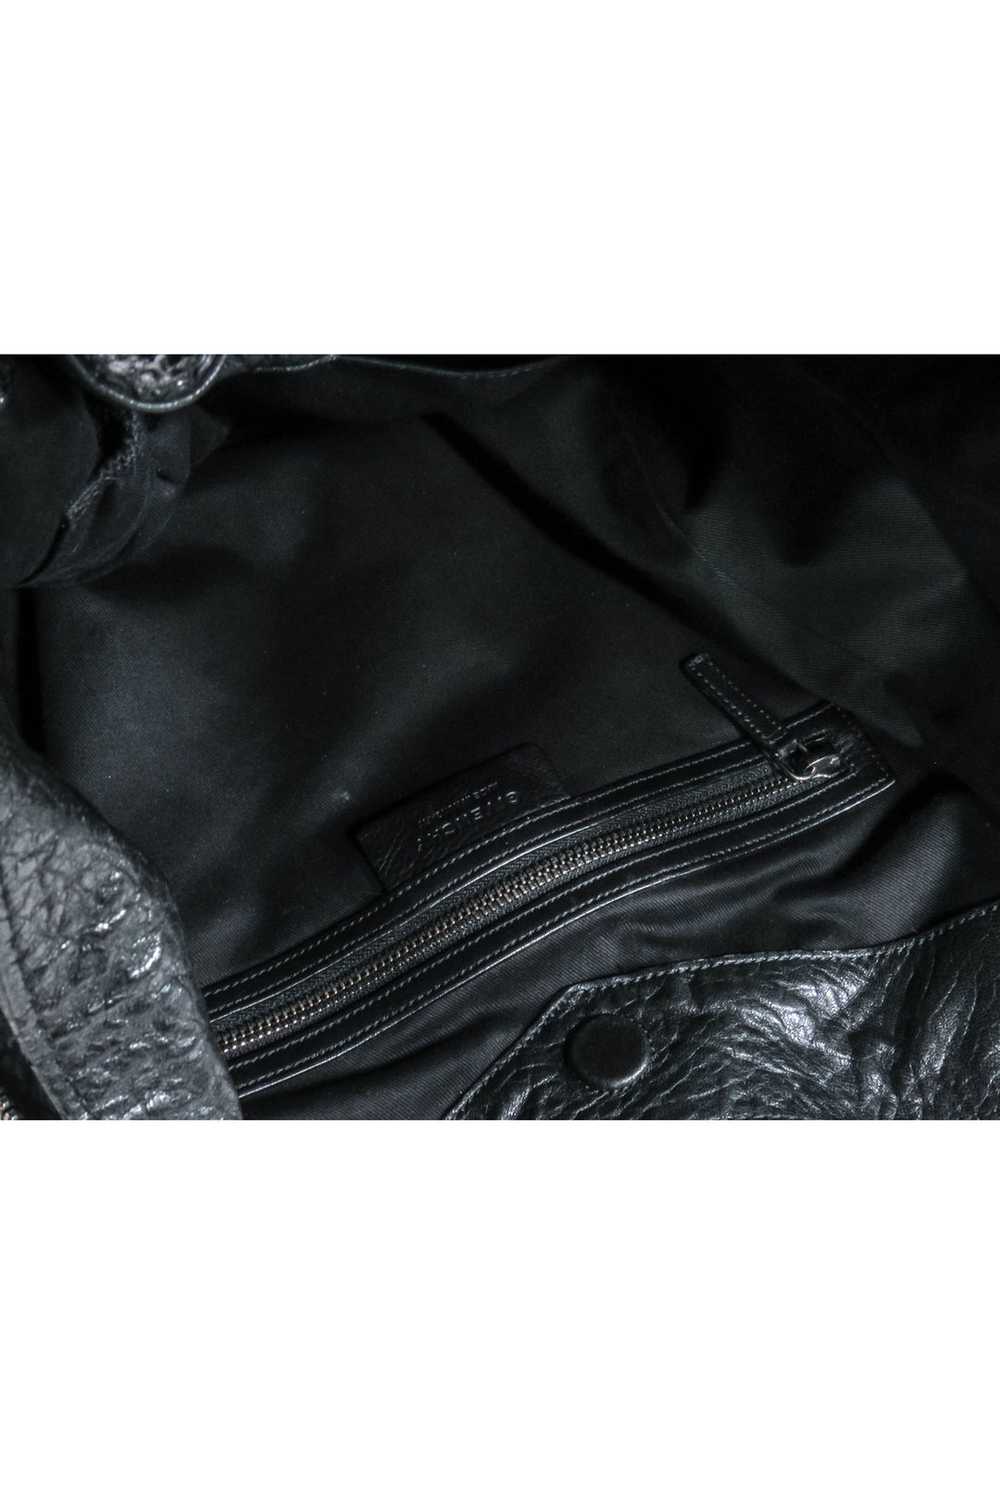 Givenchy - Black Leather Hobo Bag - image 5